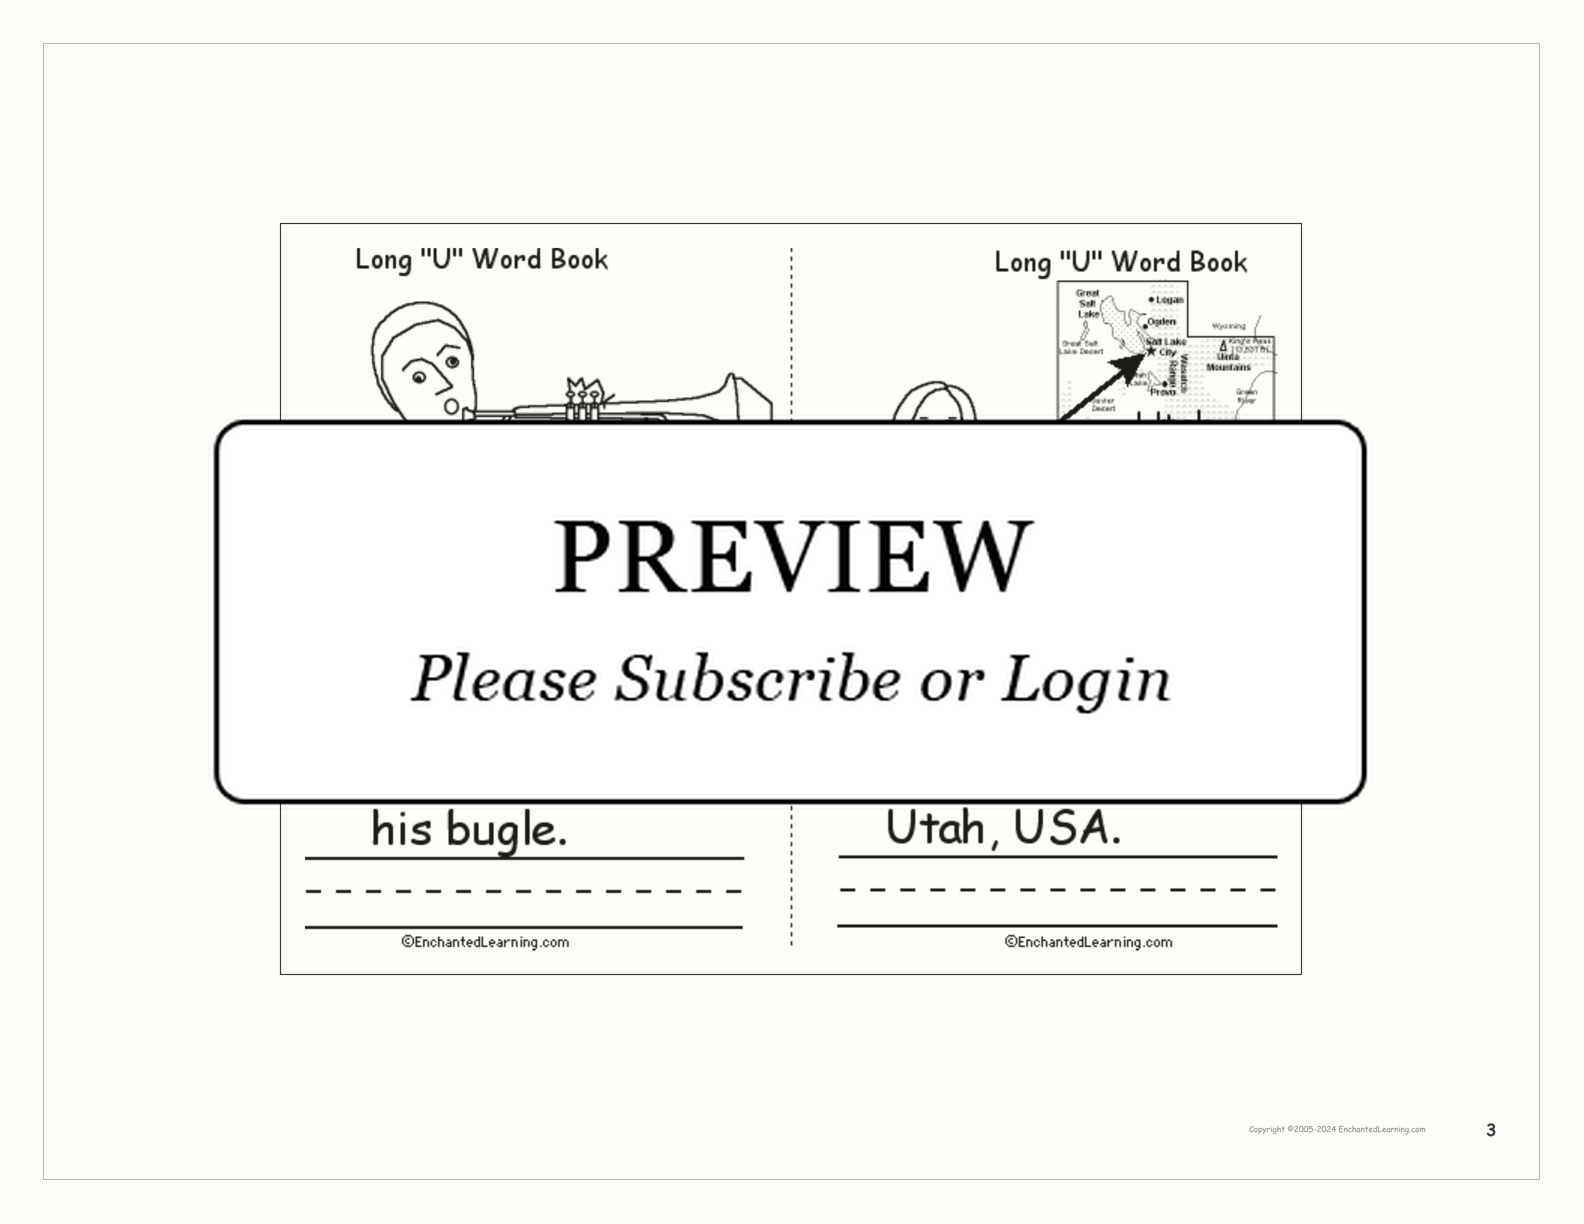 Long 'U' Words Book interactive printout page 3